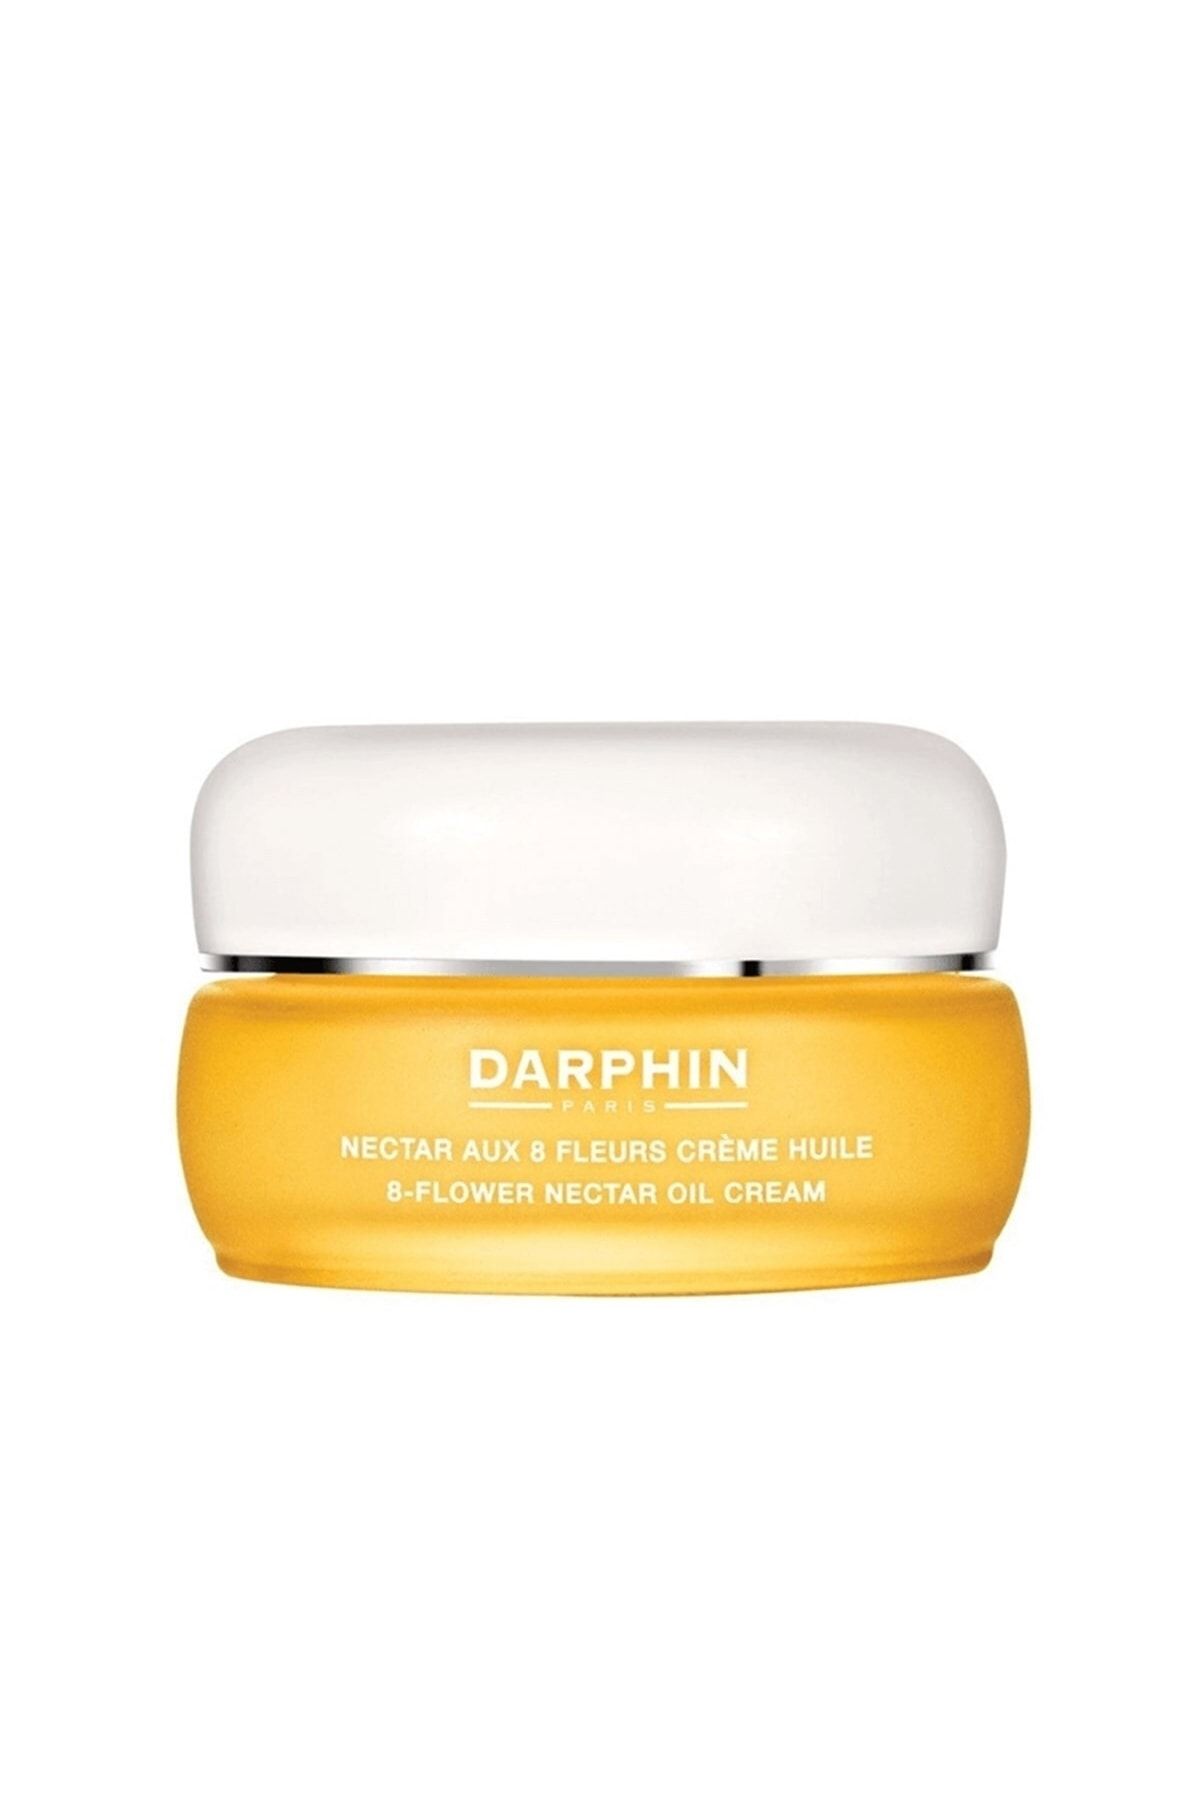 Darphin 8 - Flower Nectar Oil Cream 30 ml Jar